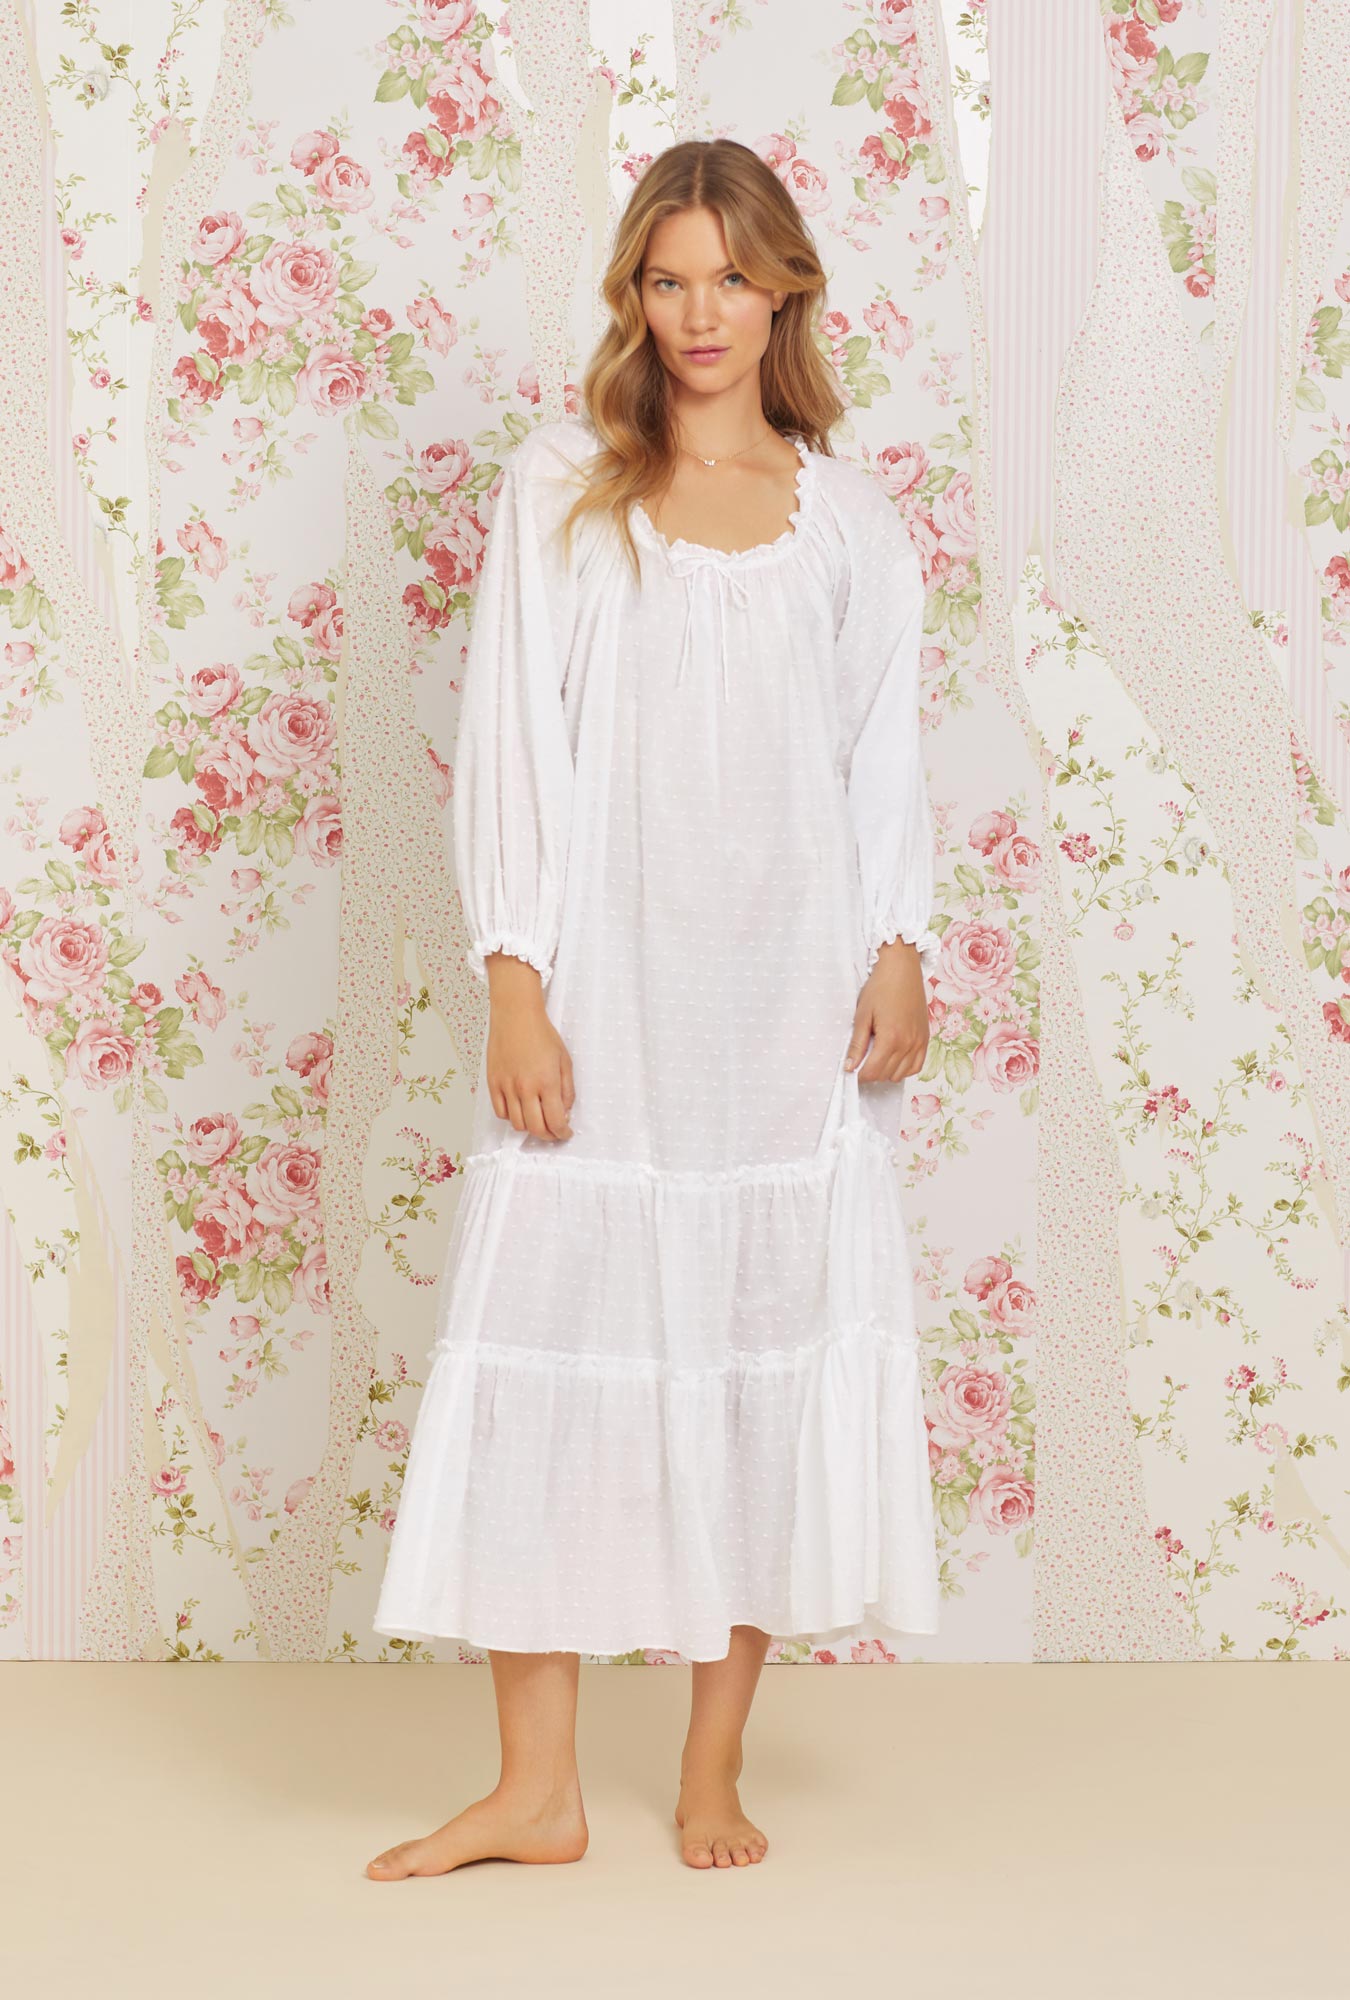 Sweetest Floral Stripe Eileen Cotton Woven Nightgown - Eileen West